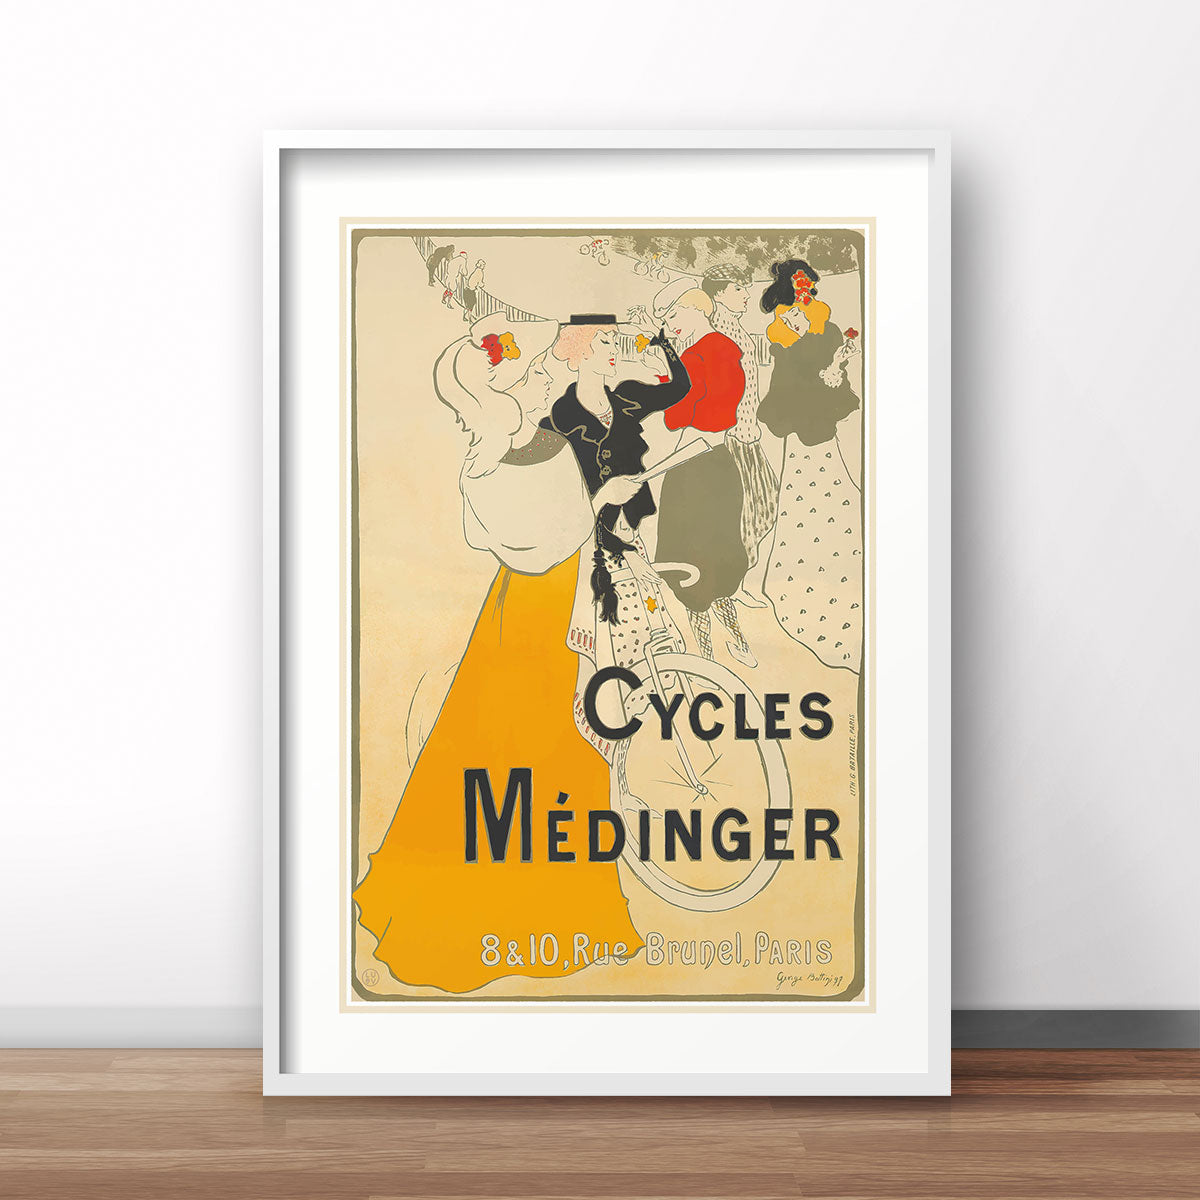 Cycles Medinger retro vintage advertising poster Paris - Places We Luv